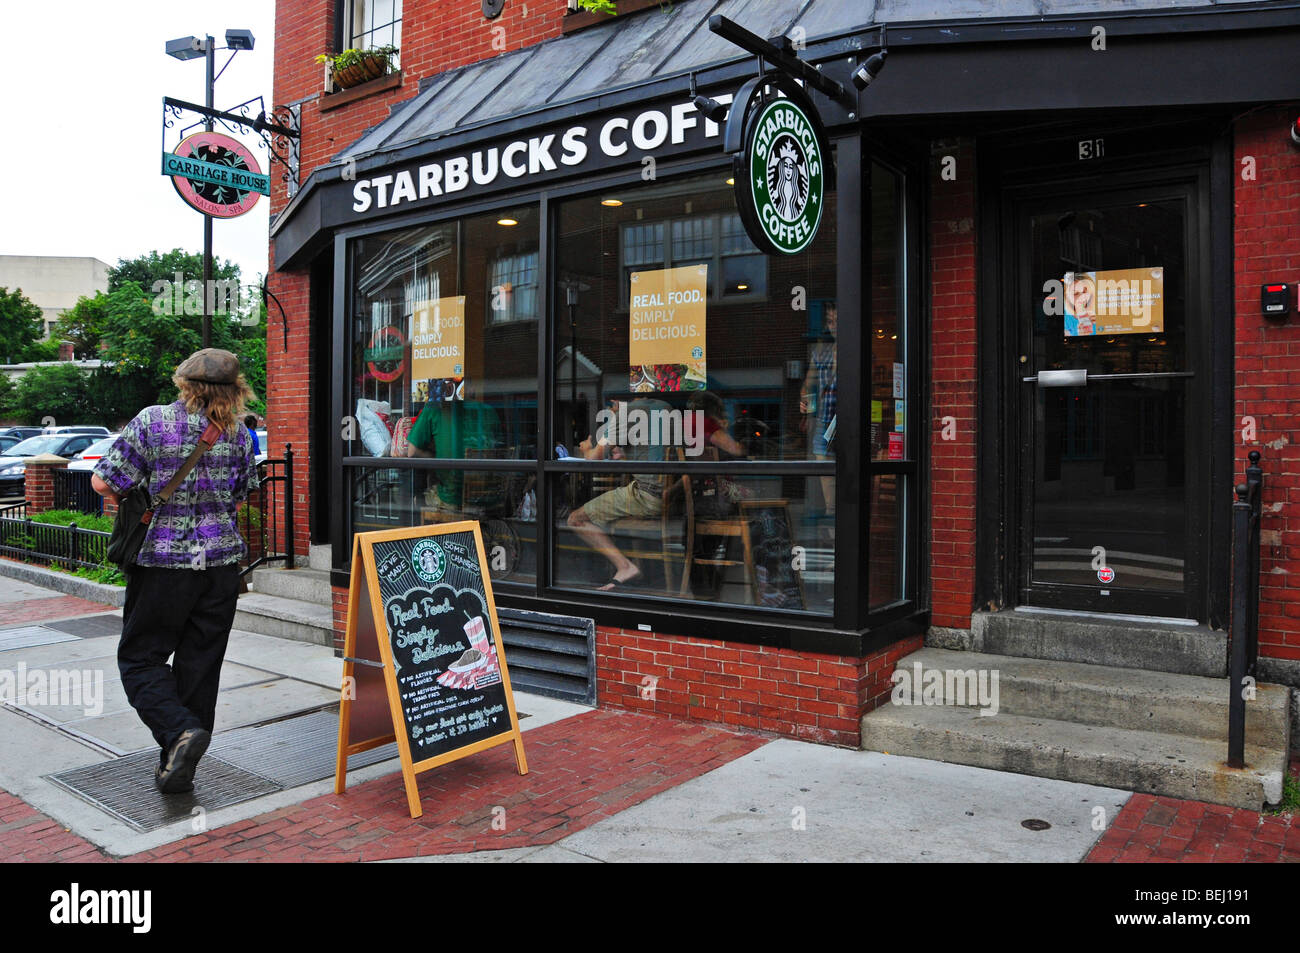 Starbucks coffee Cambridge, Massachusetts Stock Photo